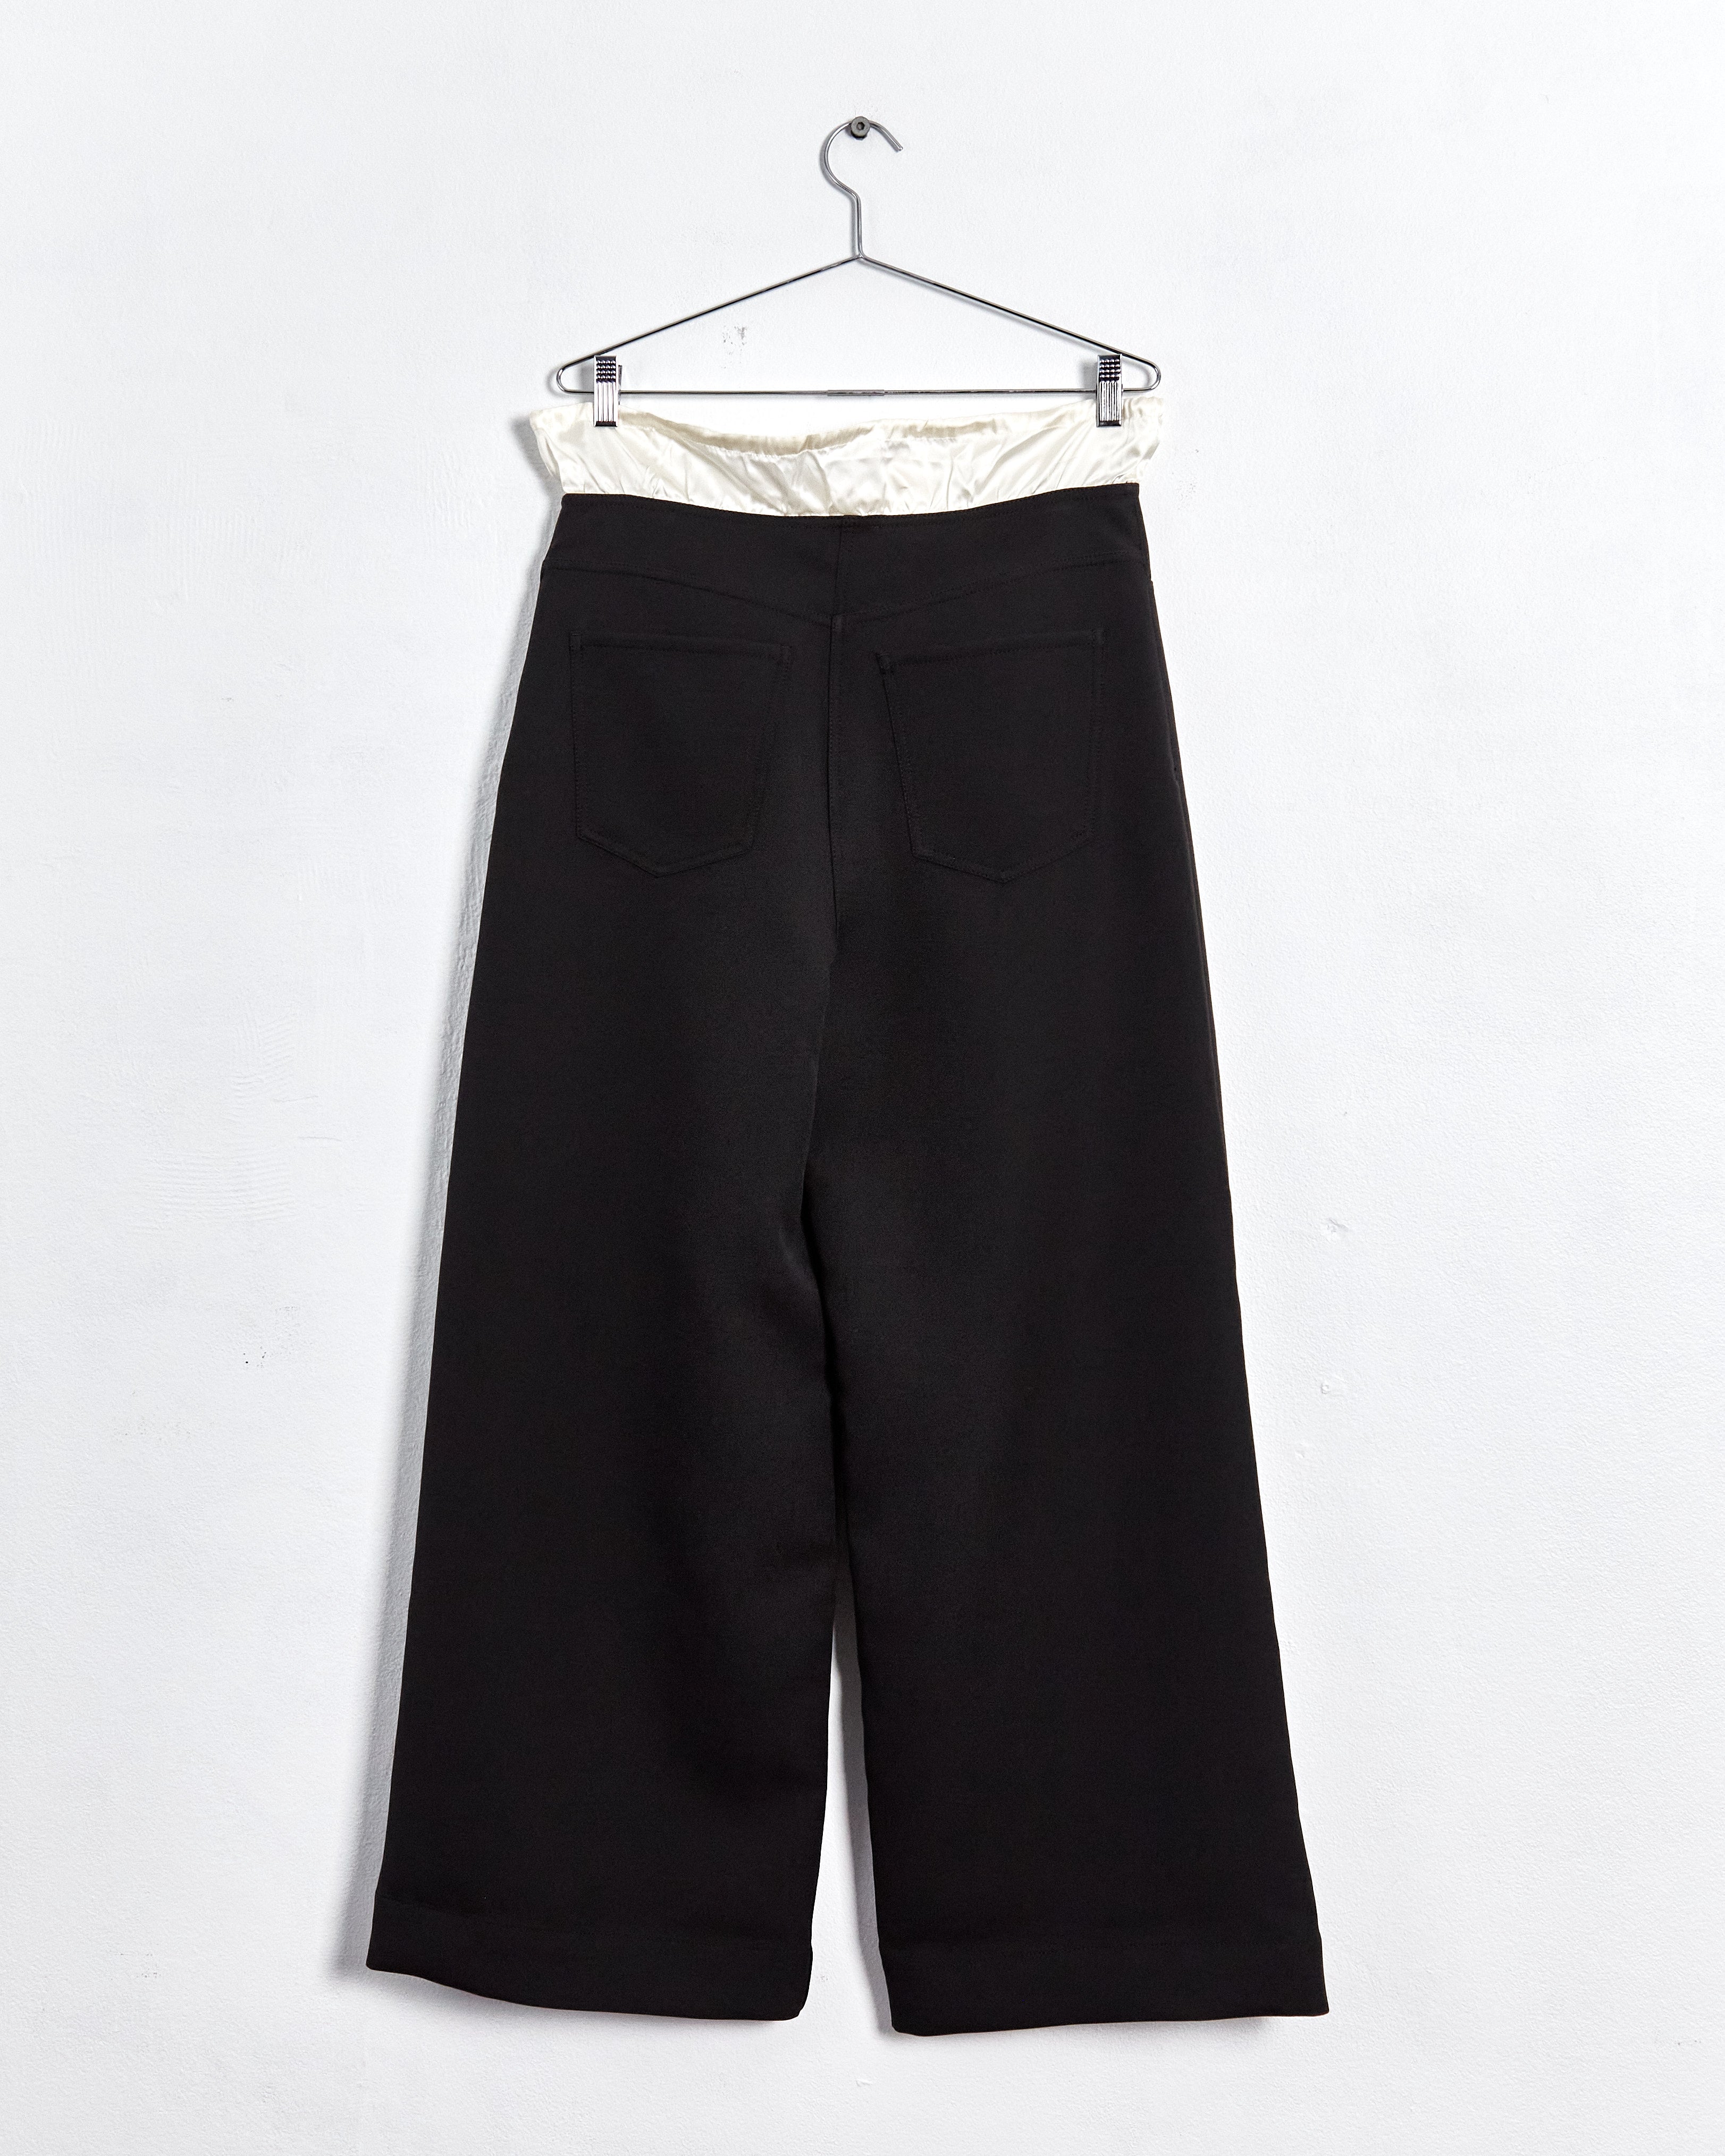 Acne Studios 'satin contrast trousers', black, 6